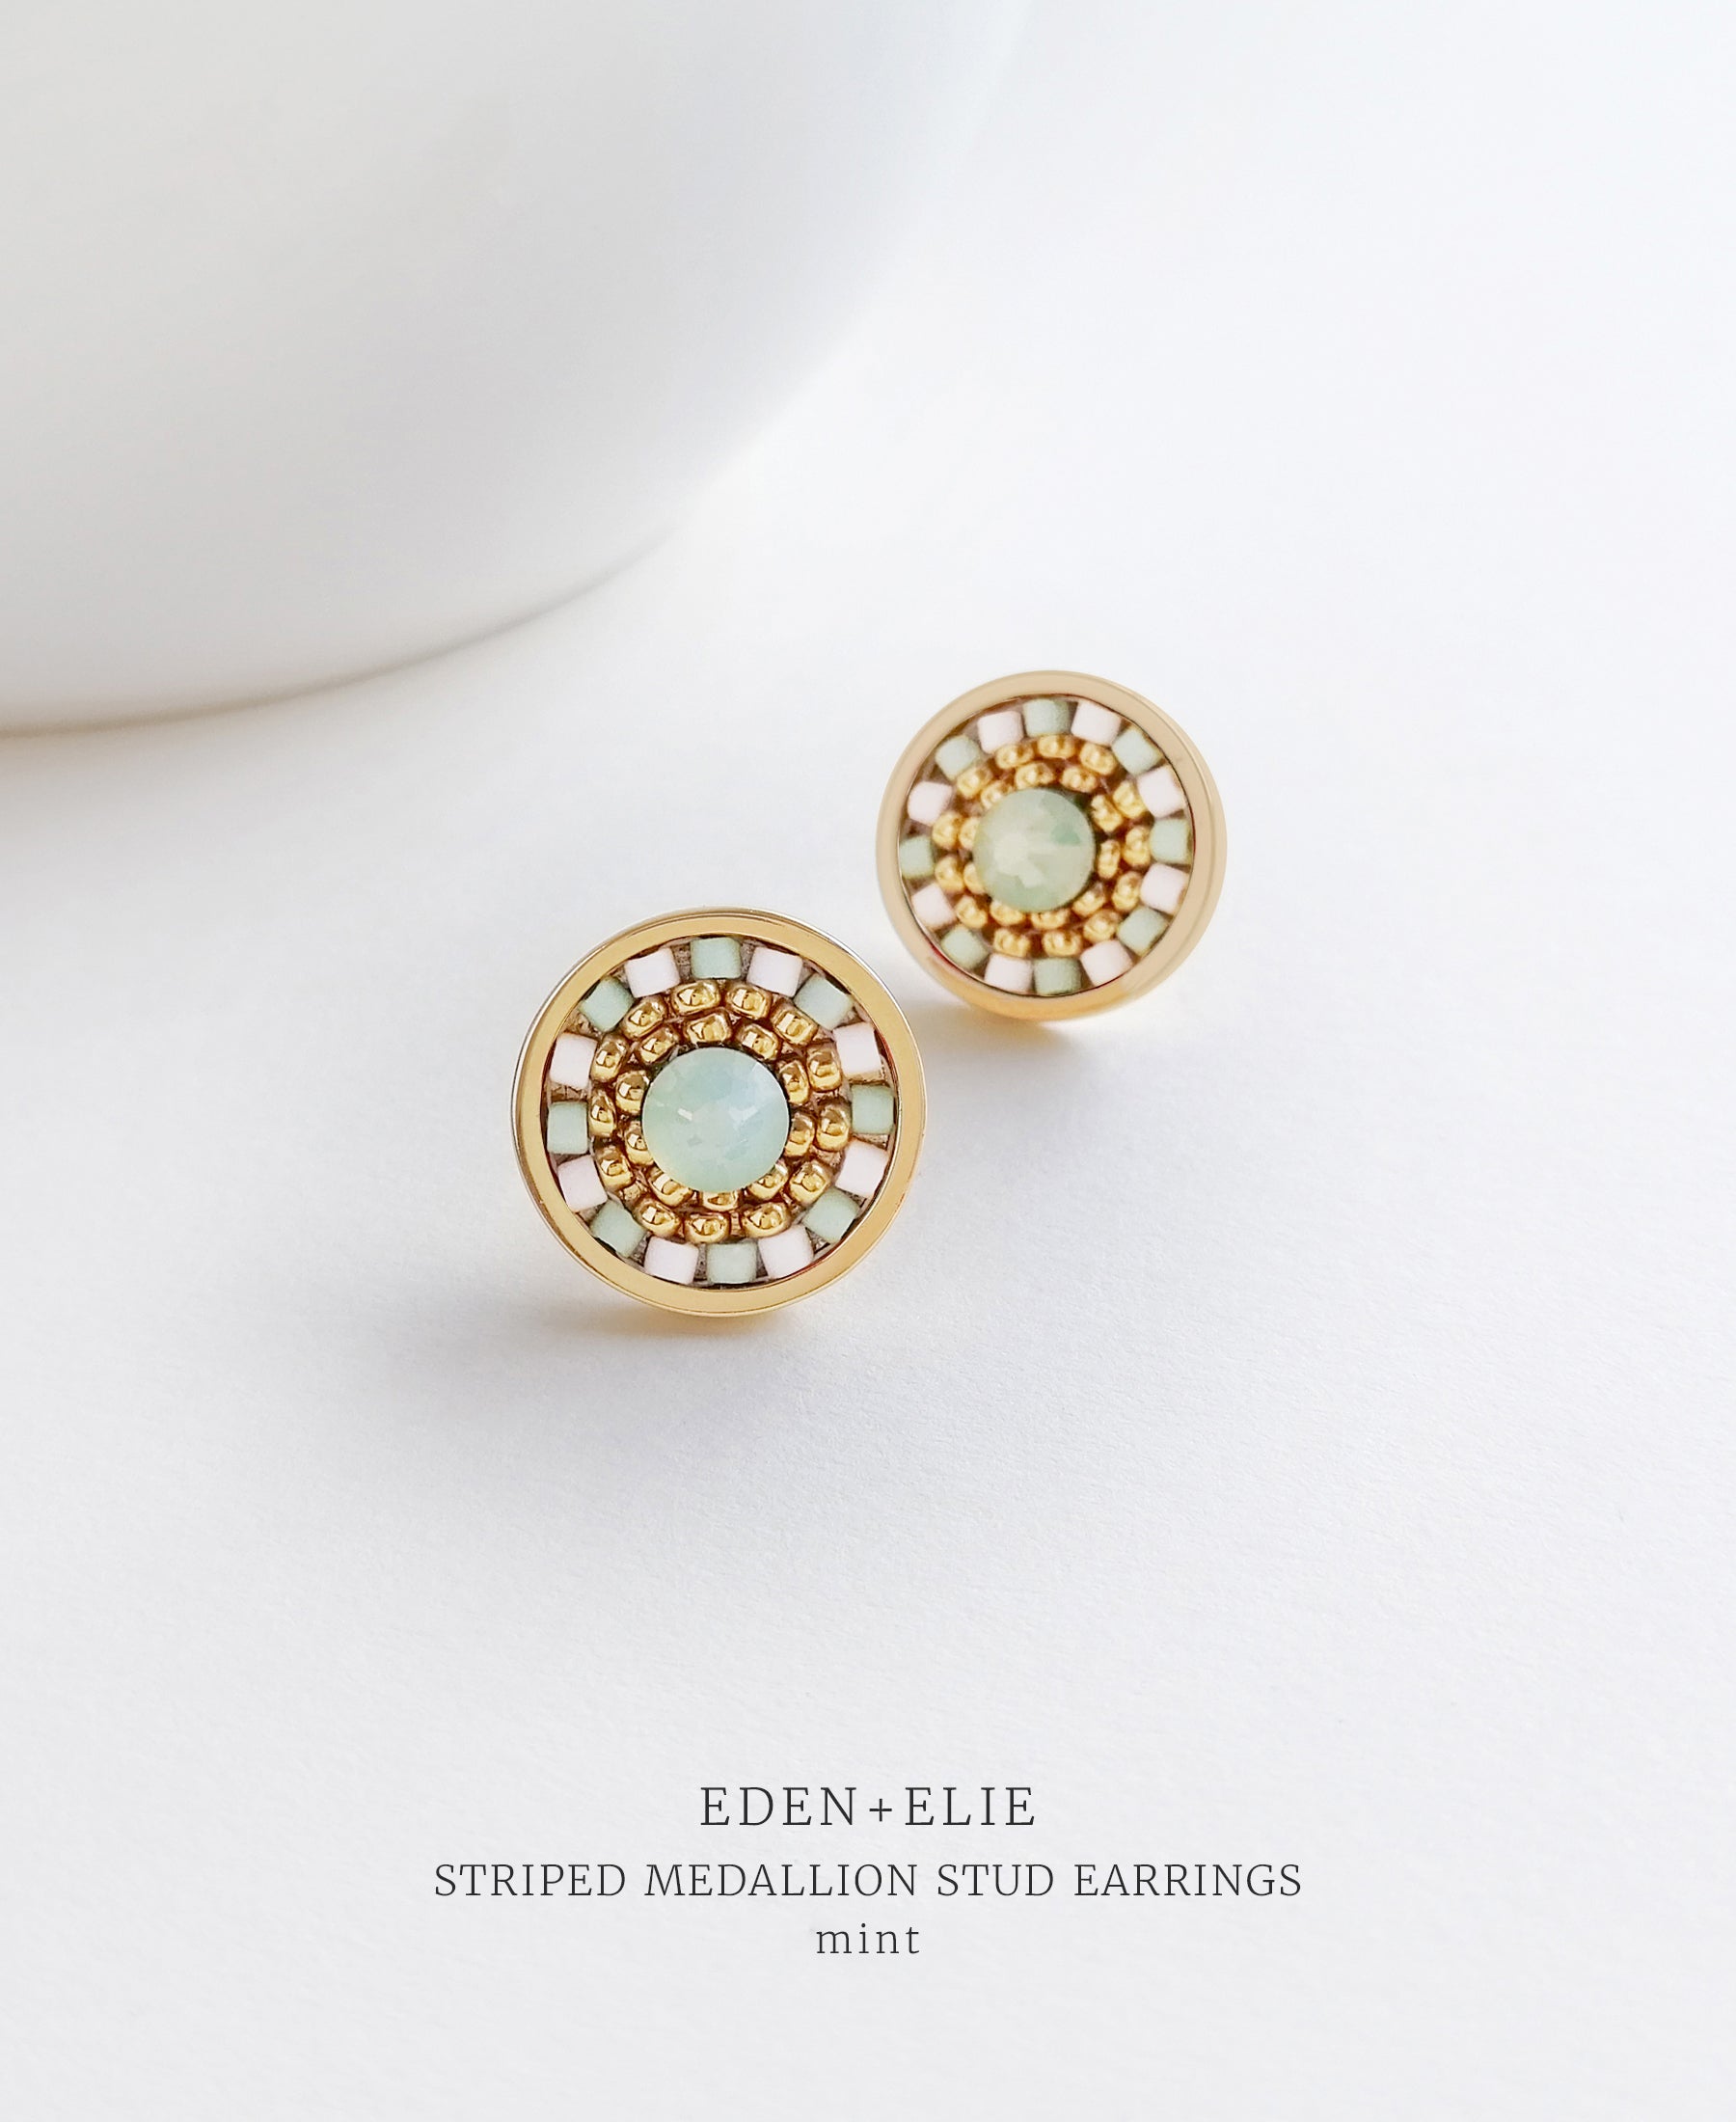 EDEN + ELIE Striped Medallion stud earrings - mint